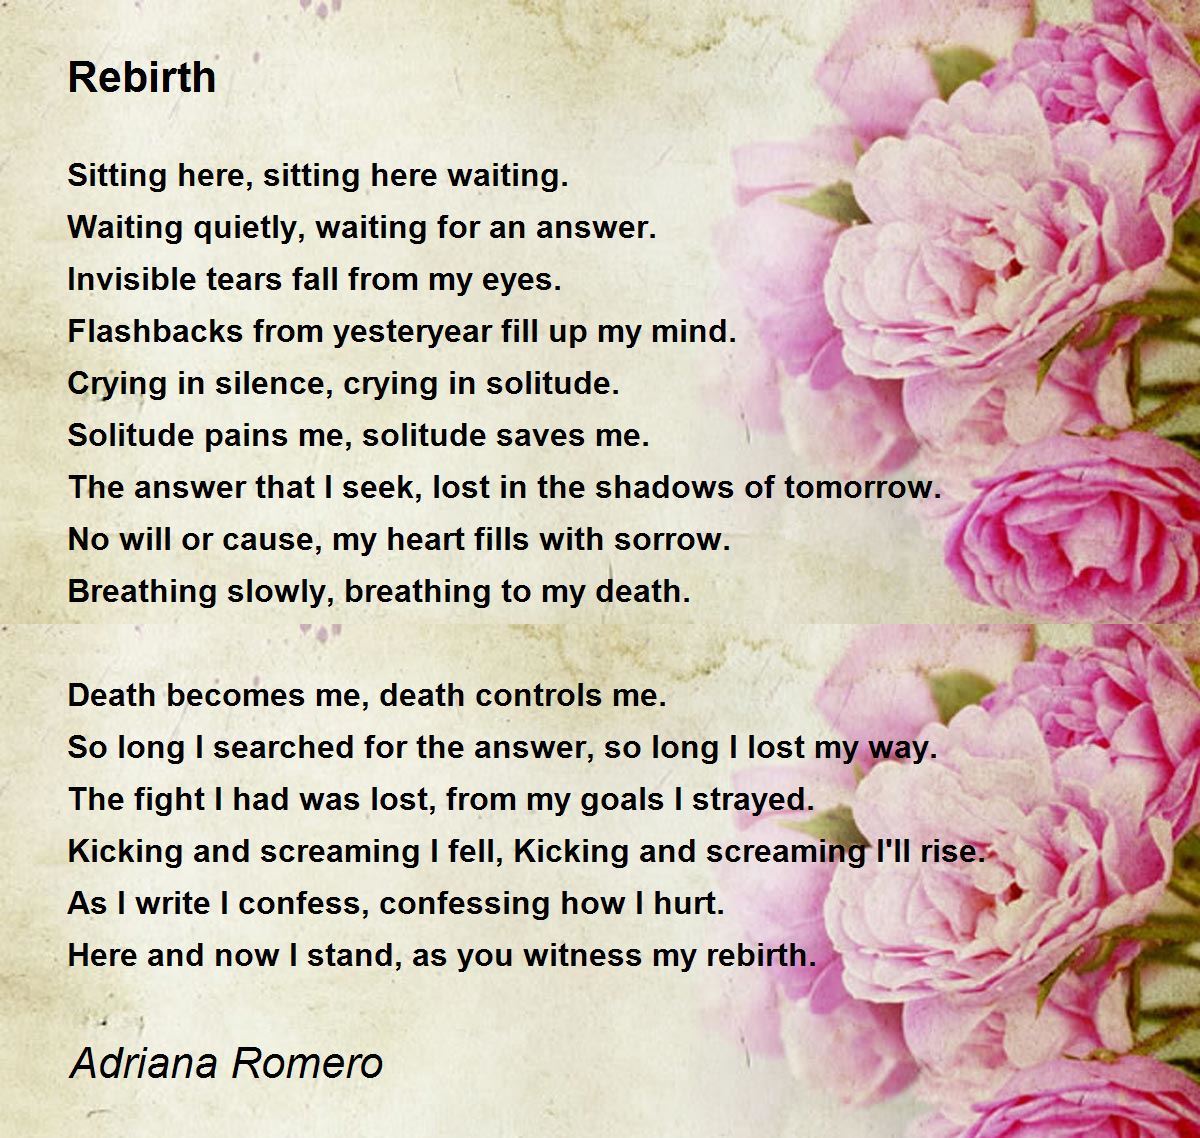 Rebirth - Rebirth Poem by Adriana Romero